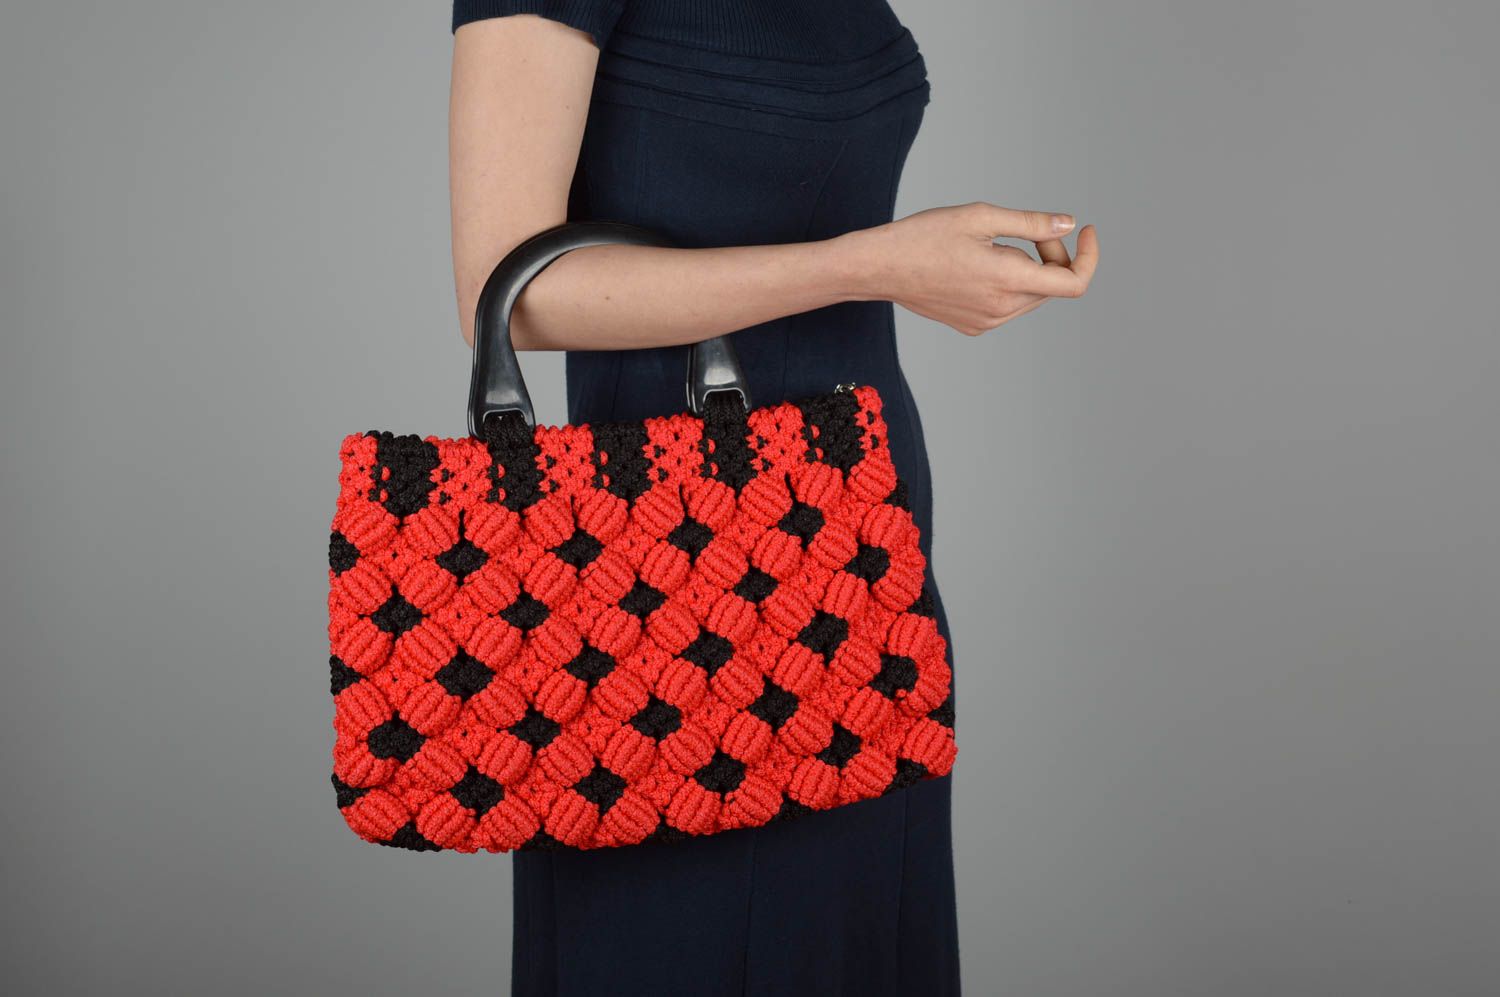 New High Quality Soft Leather Luxury Purses & Handbags Women shoulder Bags  Mult | eBay